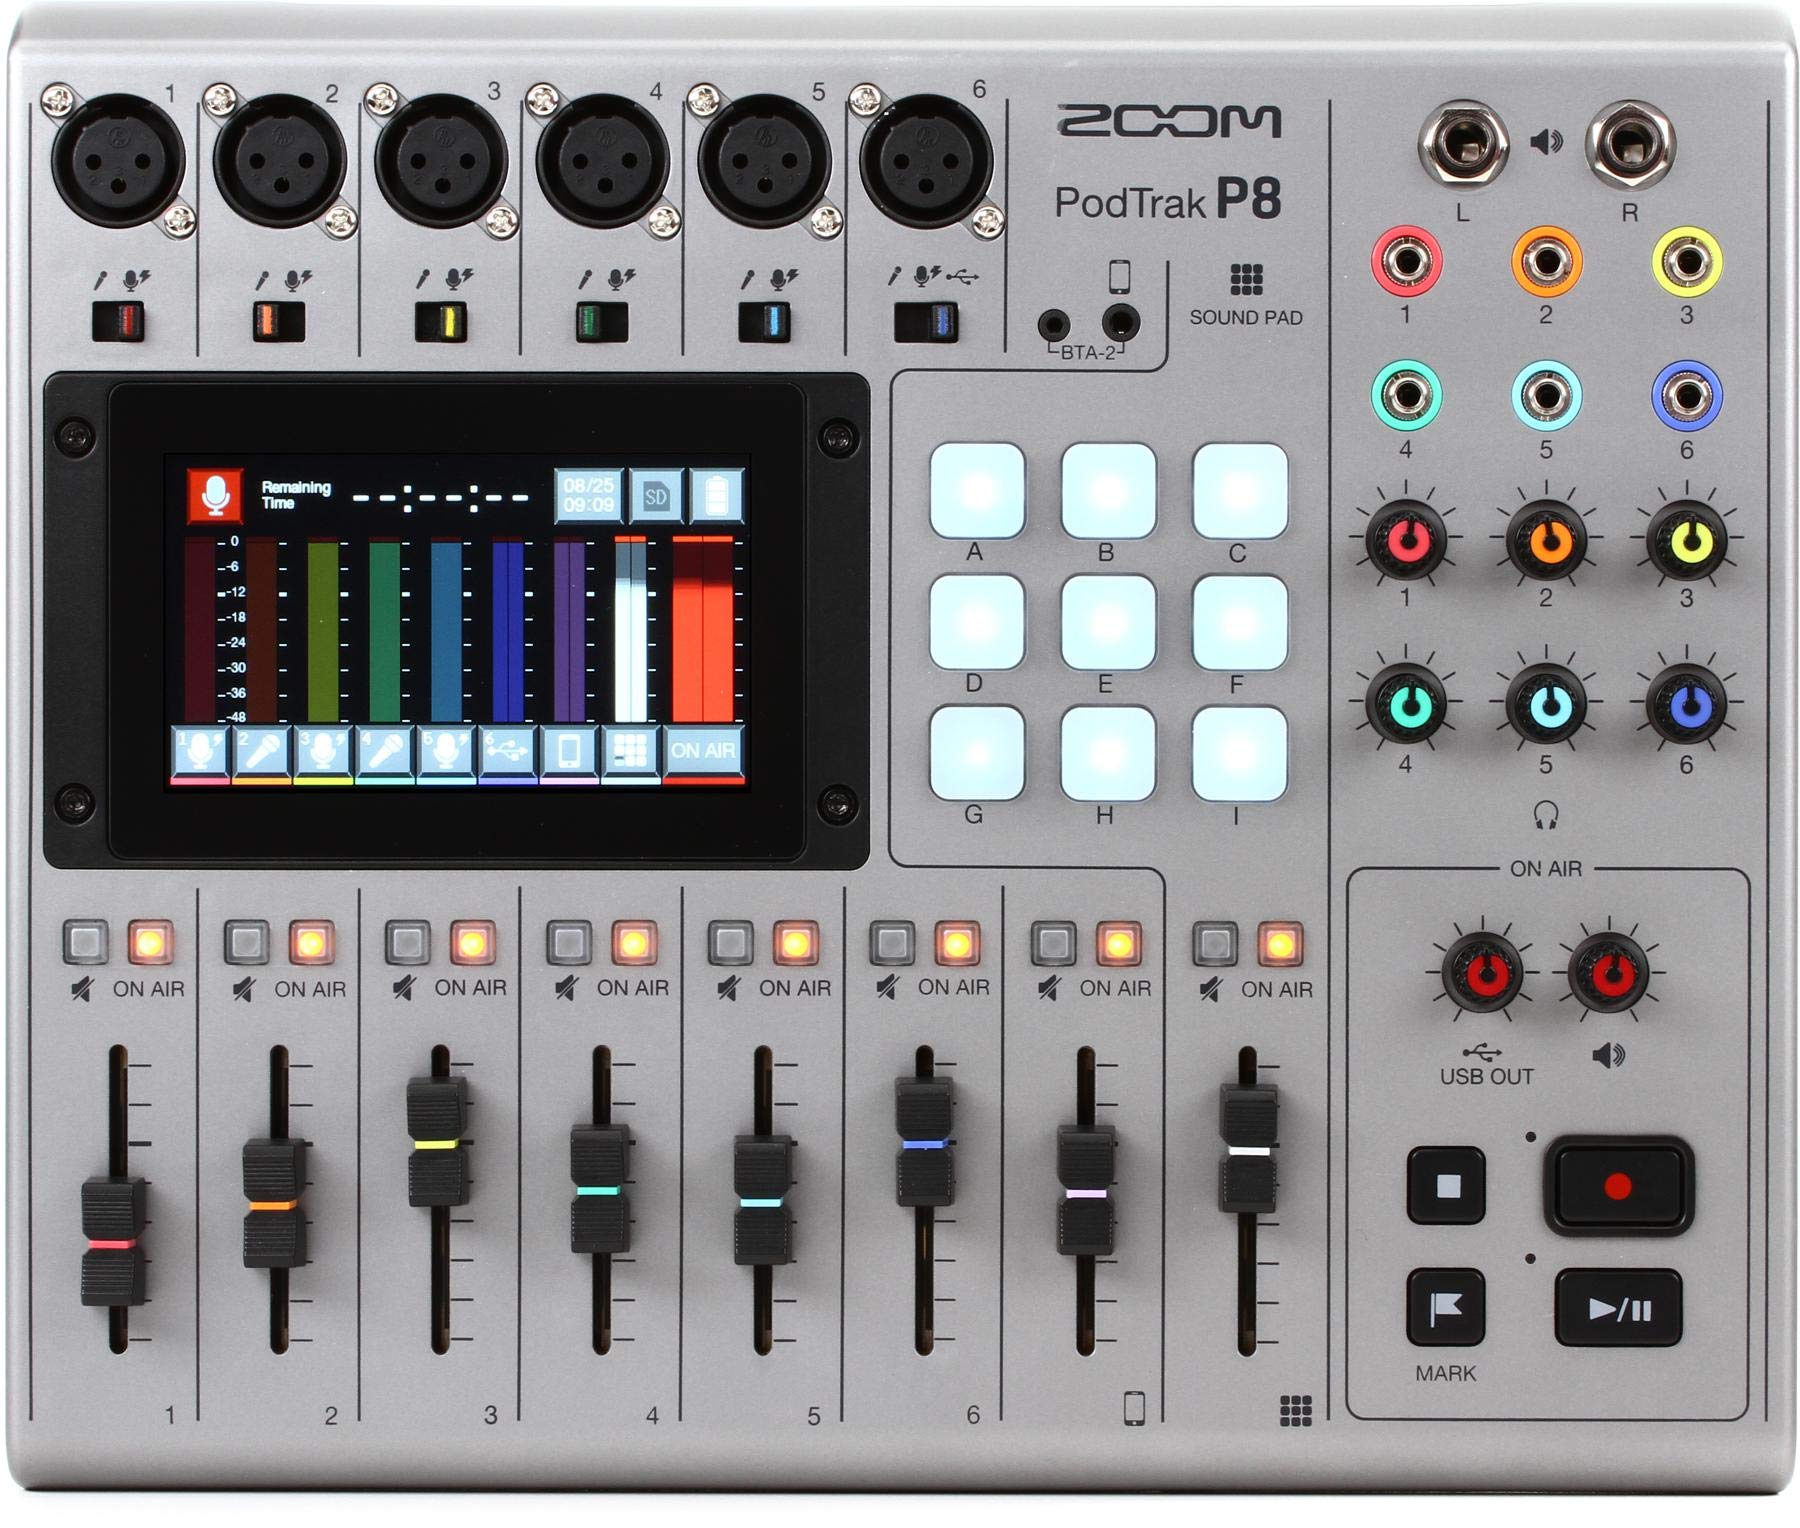 Zoom PodTrak P8 播客录音机、6 个麦克风输入、6 个耳机输出、电话输入、音垫、板载编辑、录制到...